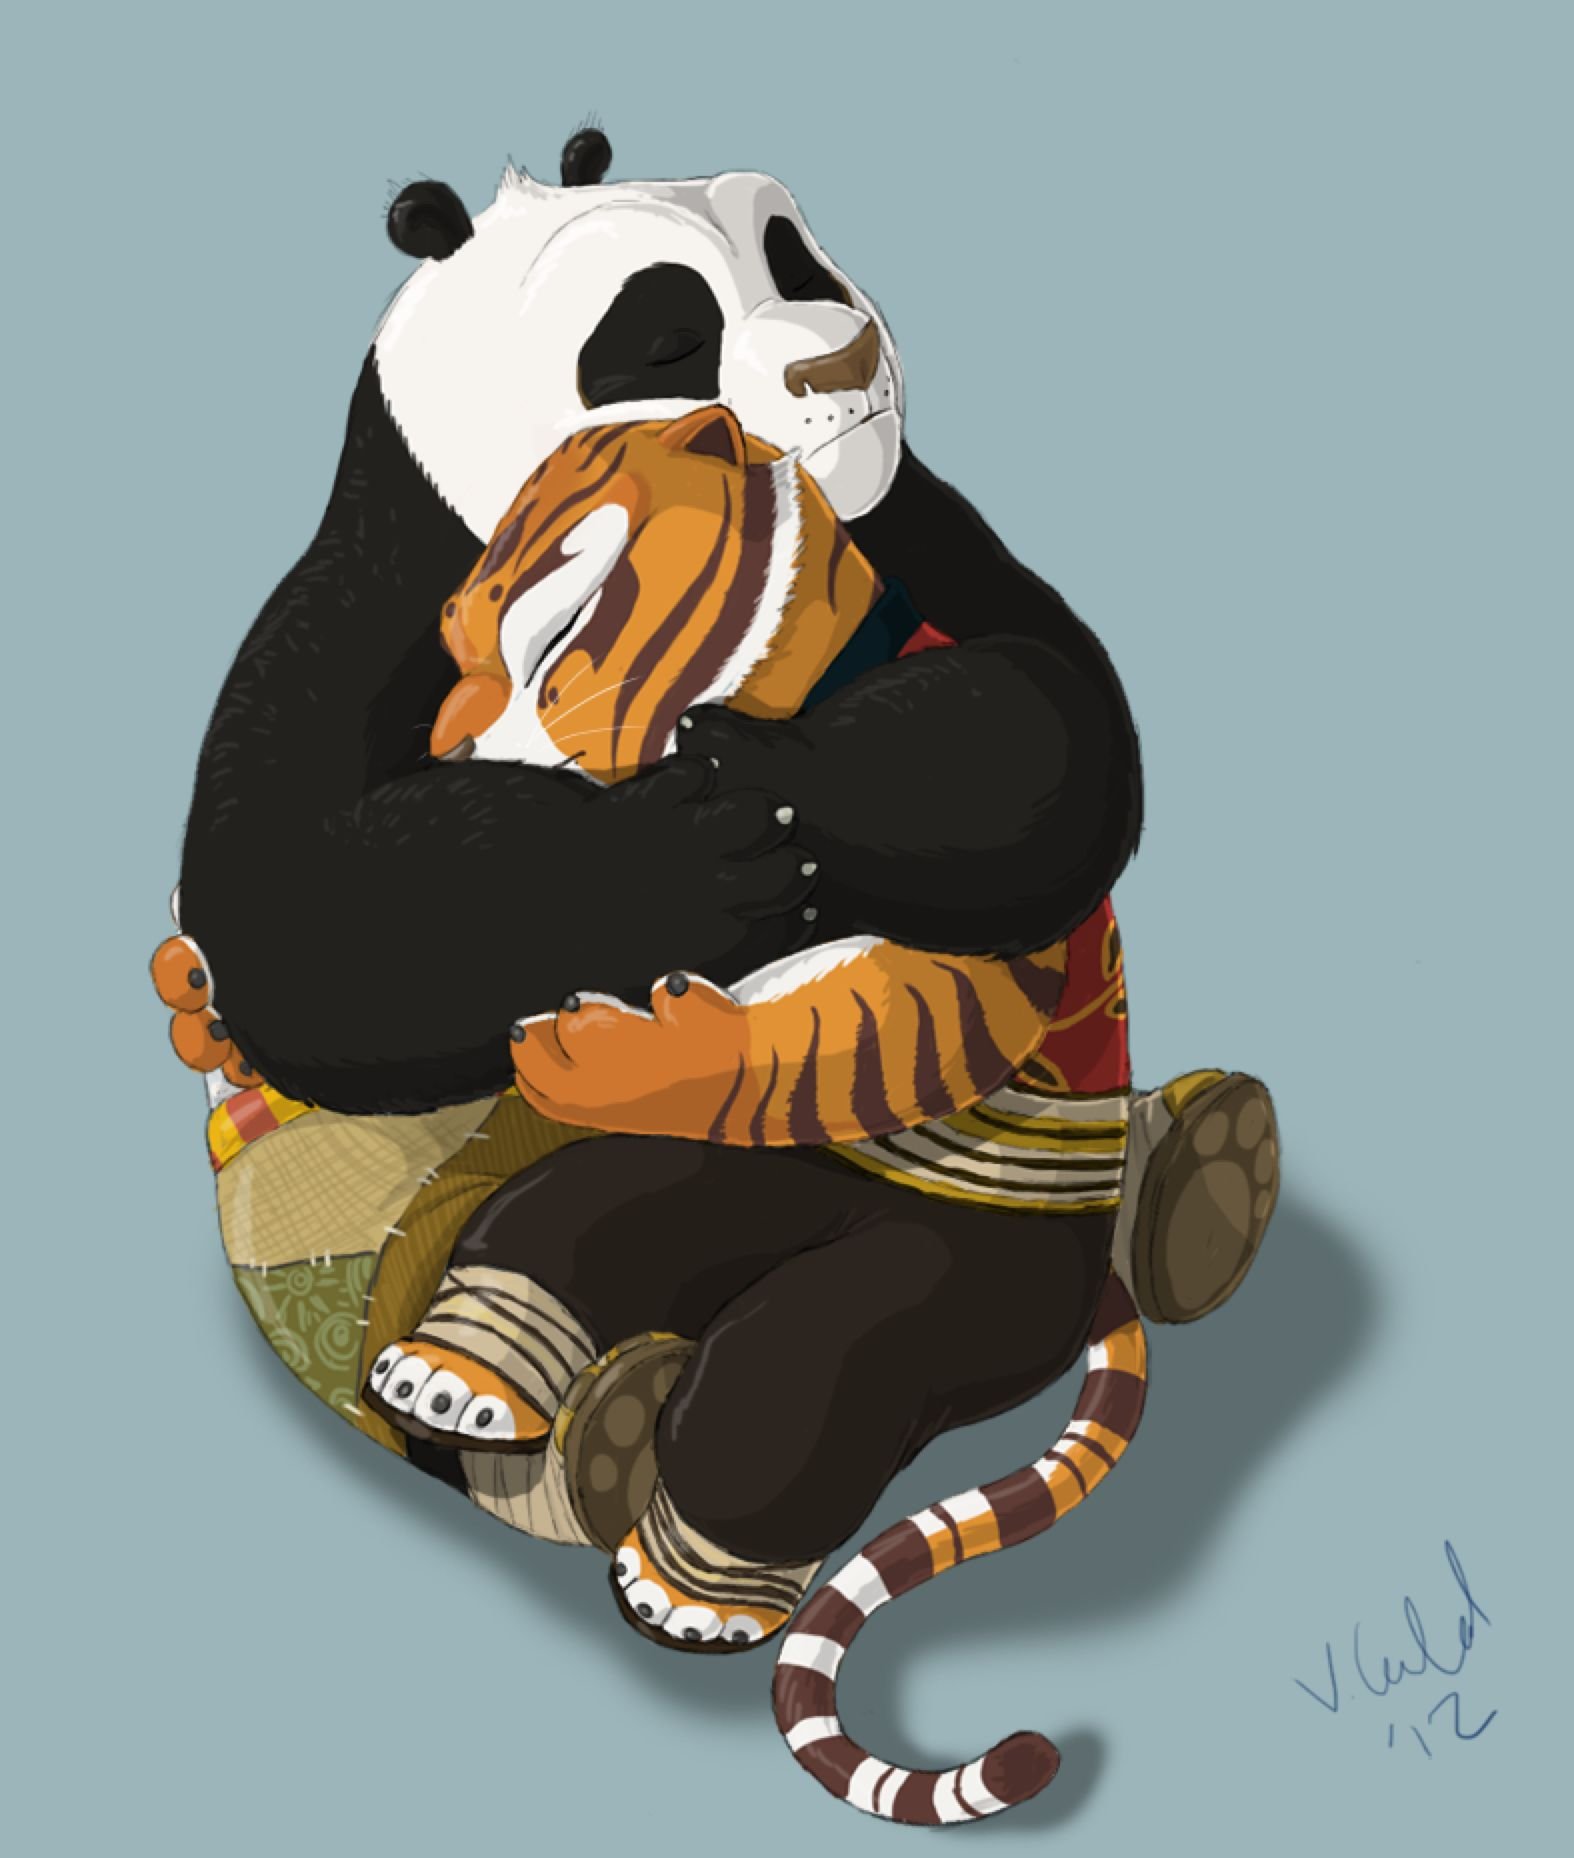 Уссурийский тигр и панда